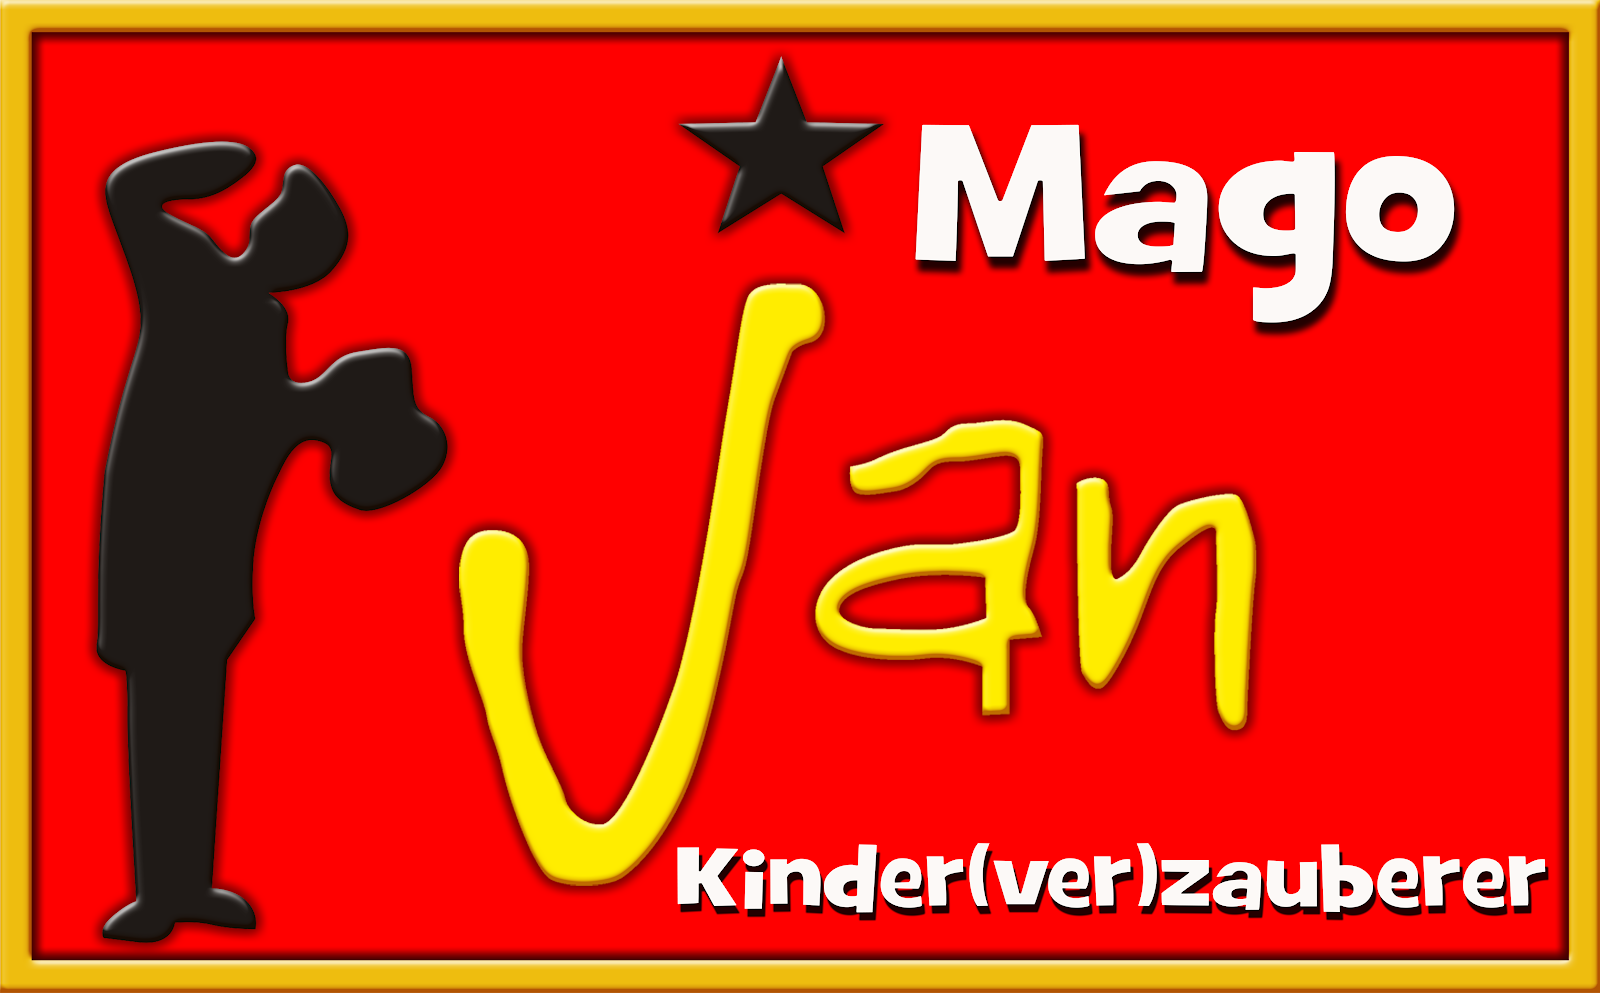 Zauberer Kindergeburtstag in Jena